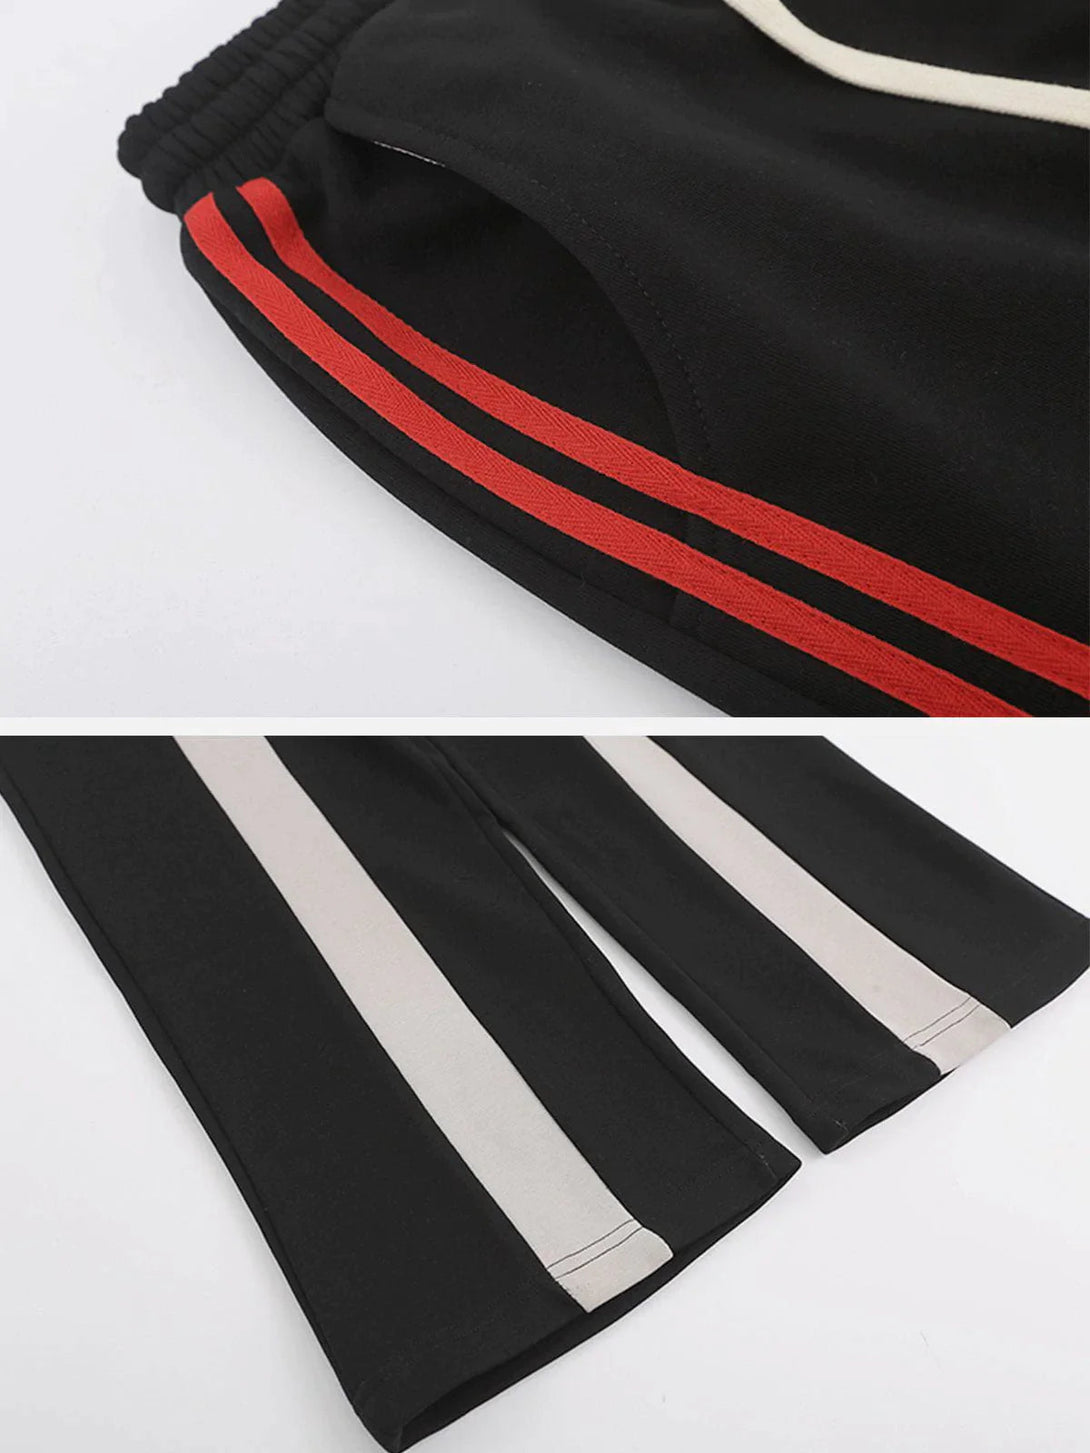 Majesda® - Stripe Clashing Colors Pants outfit ideas streetwear fashion